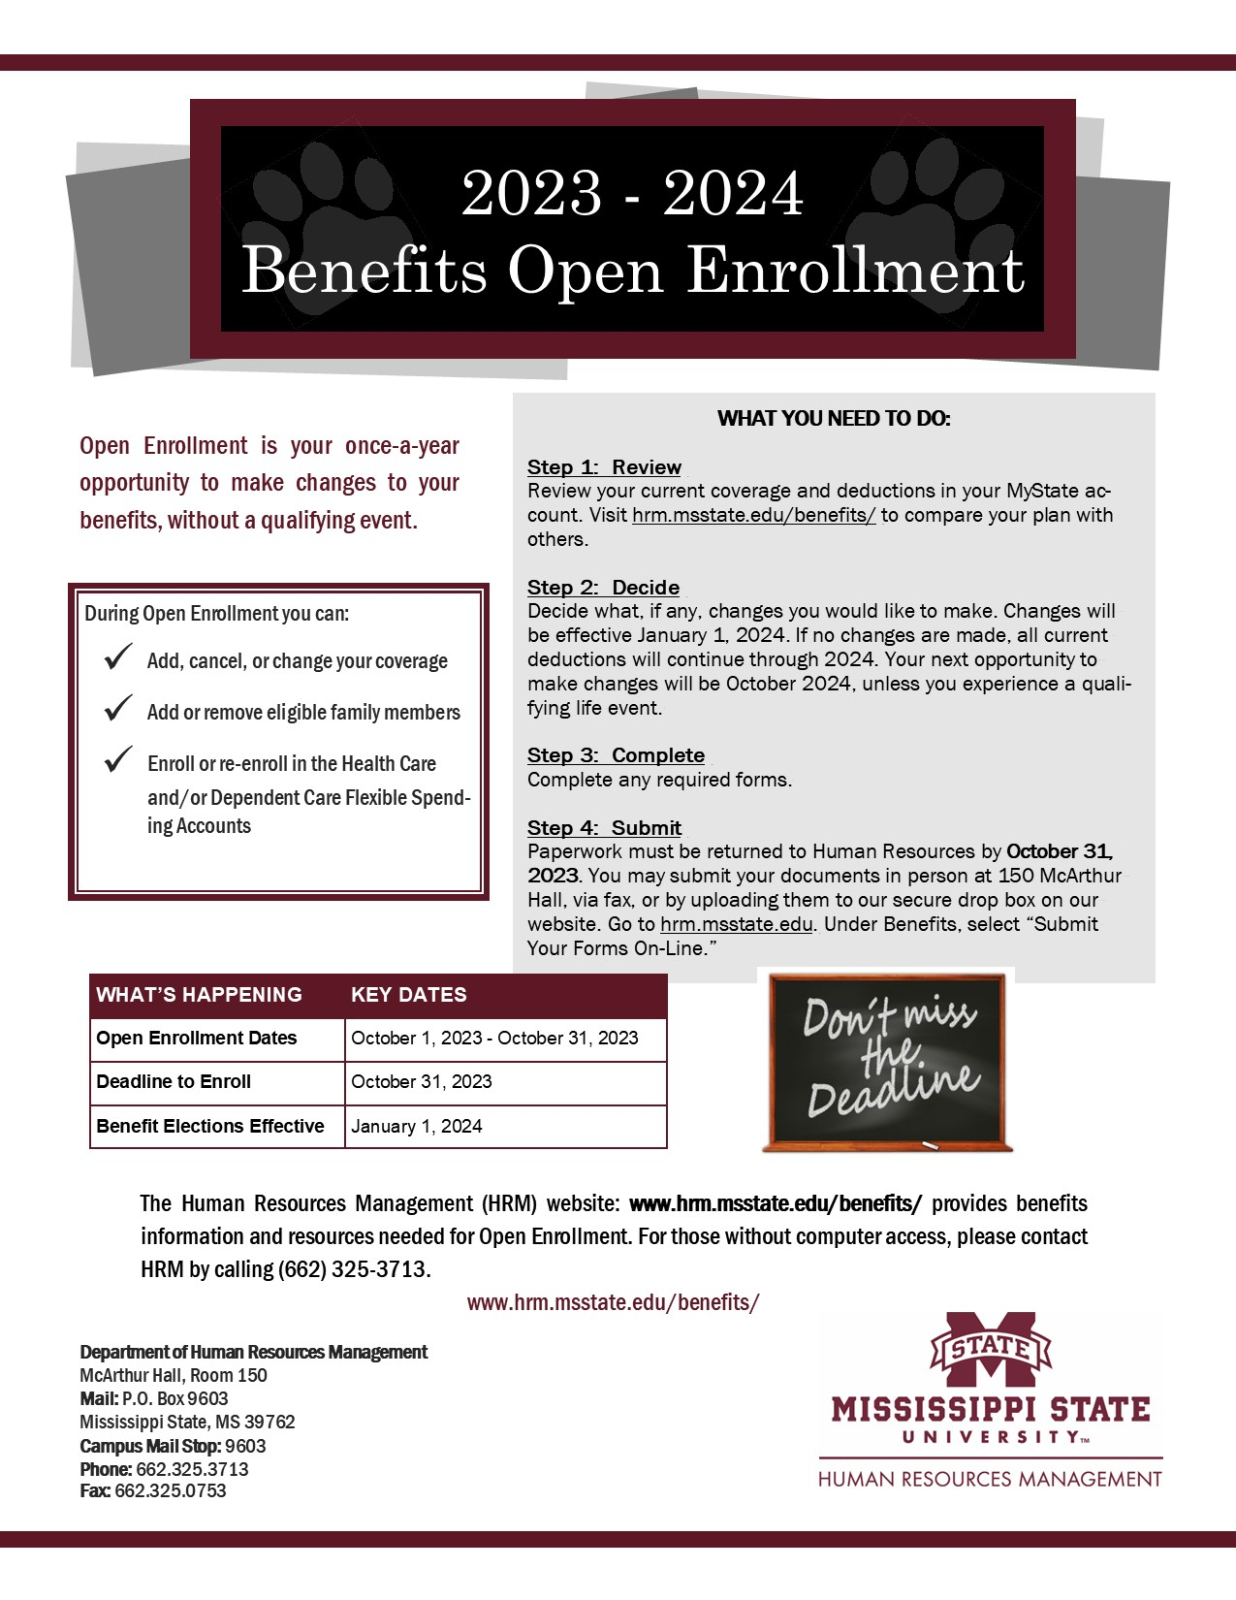 Annual Benefits Open Enrollment